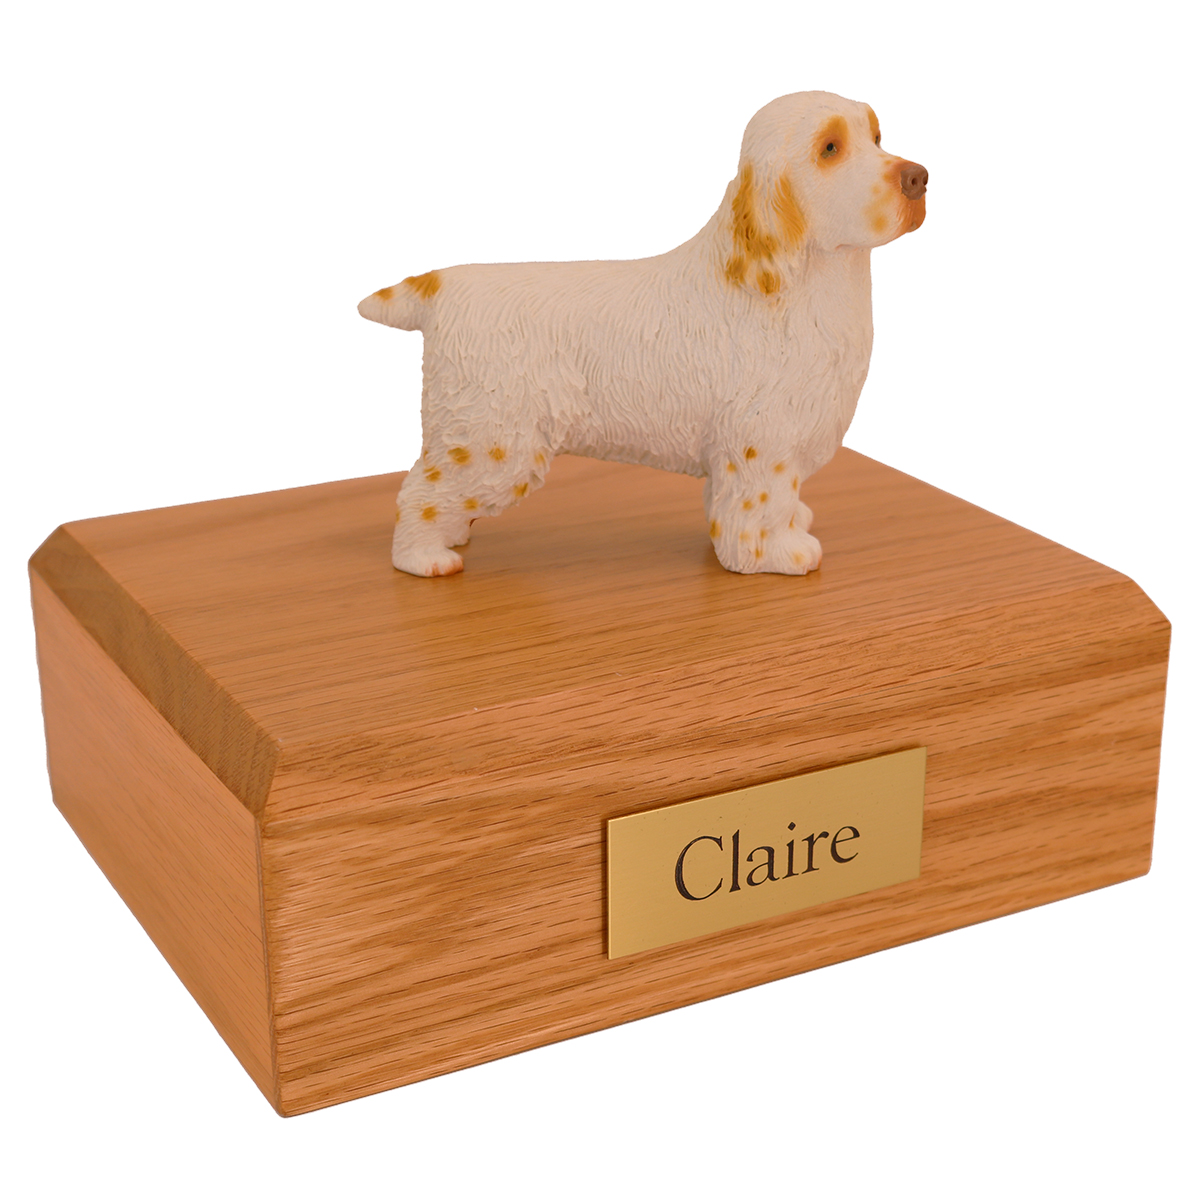 Dog, Clumber Spaniel - Figurine Urn